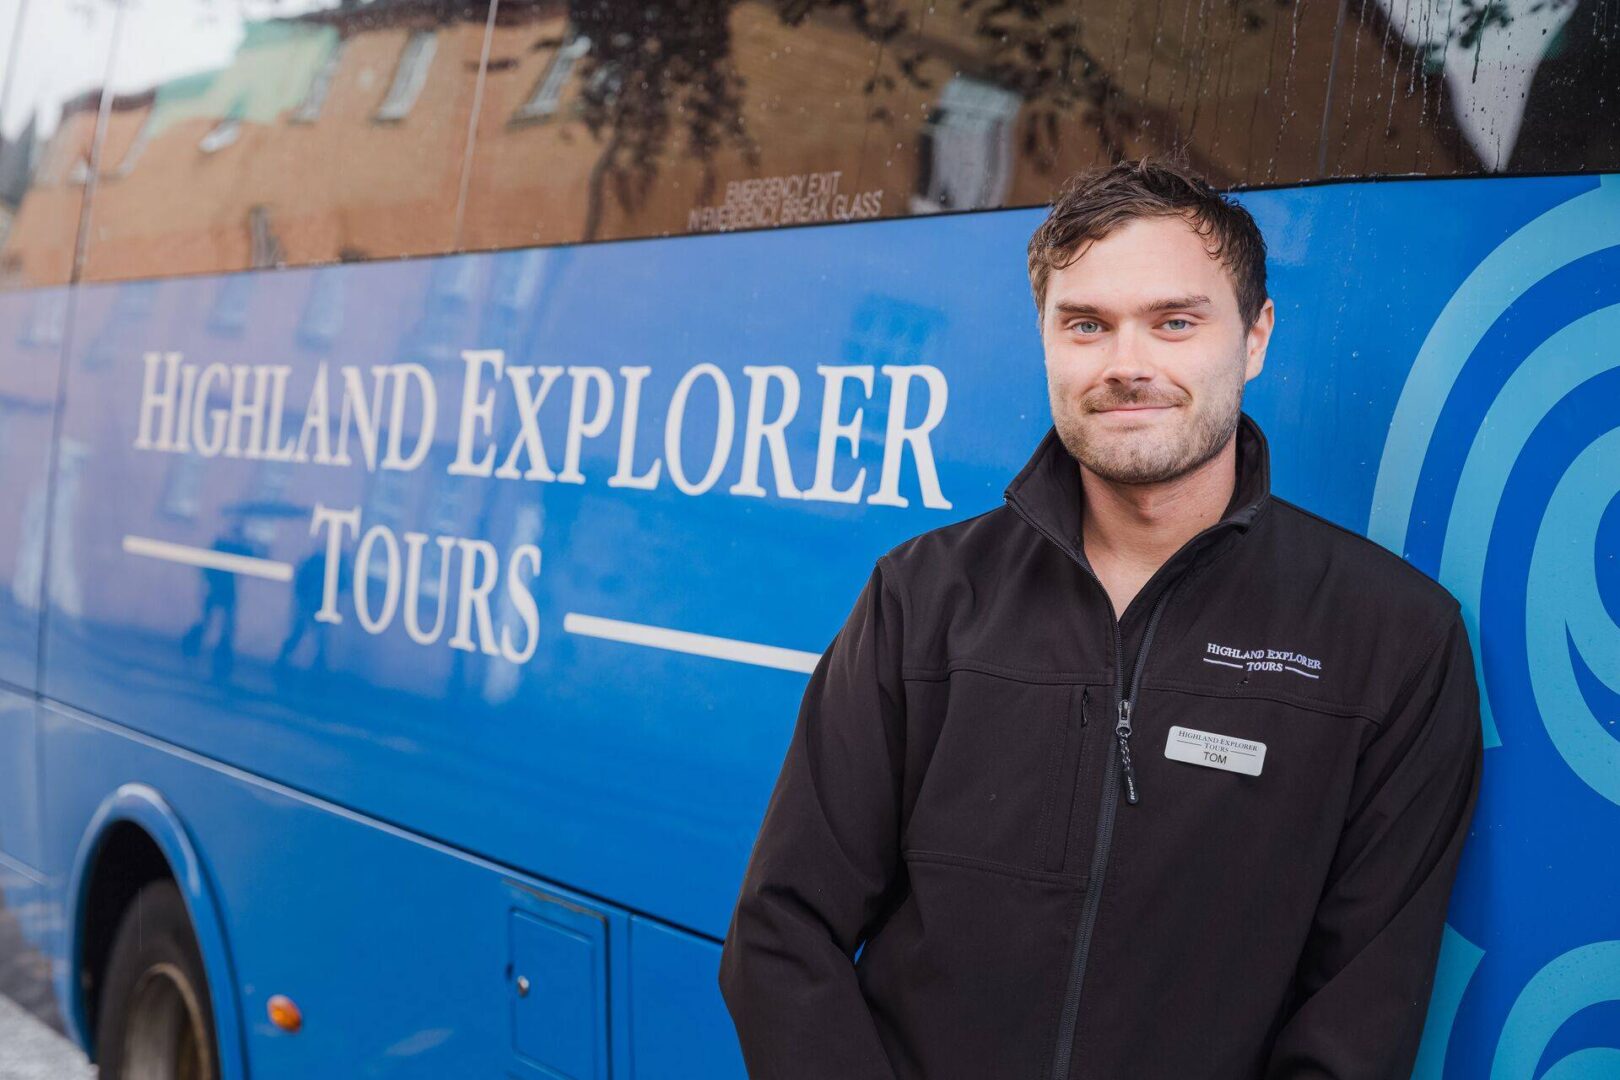 Highland Explorer tours Coach and Guide, Stephen Bridger